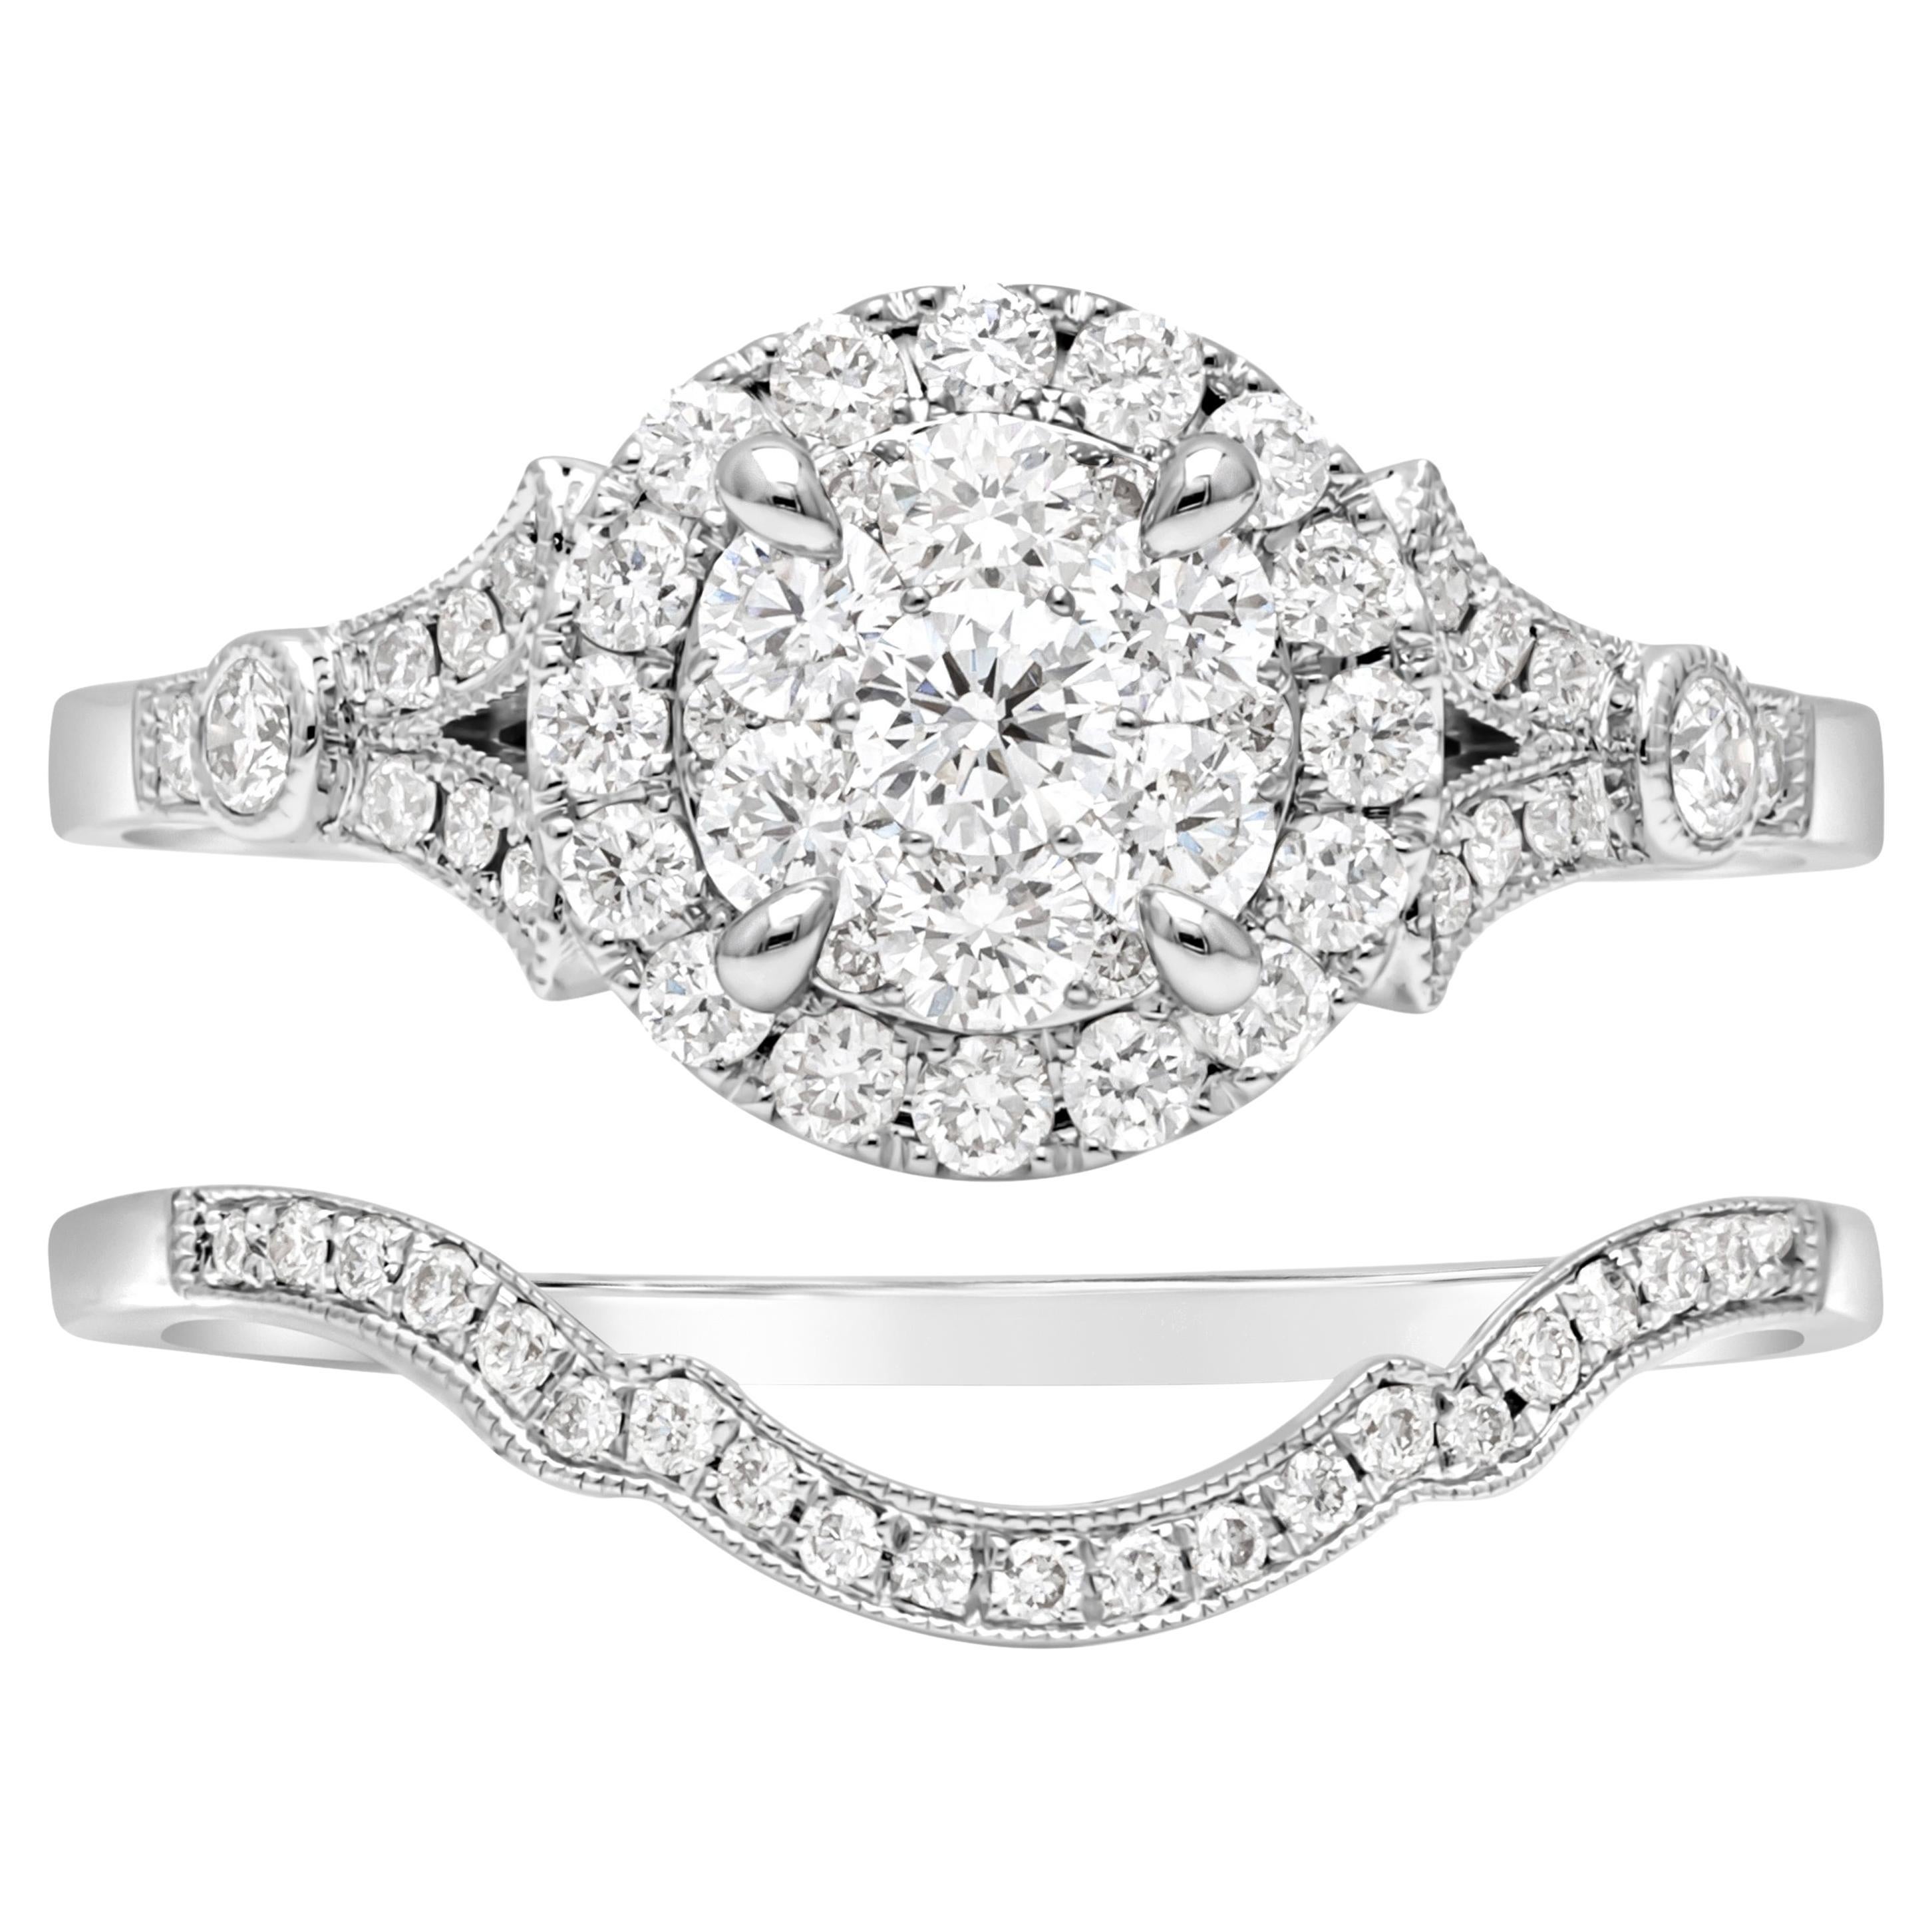 0.72 Carats Total Round Diamond Halo Illusion Engagement And Wedding Ring Set 